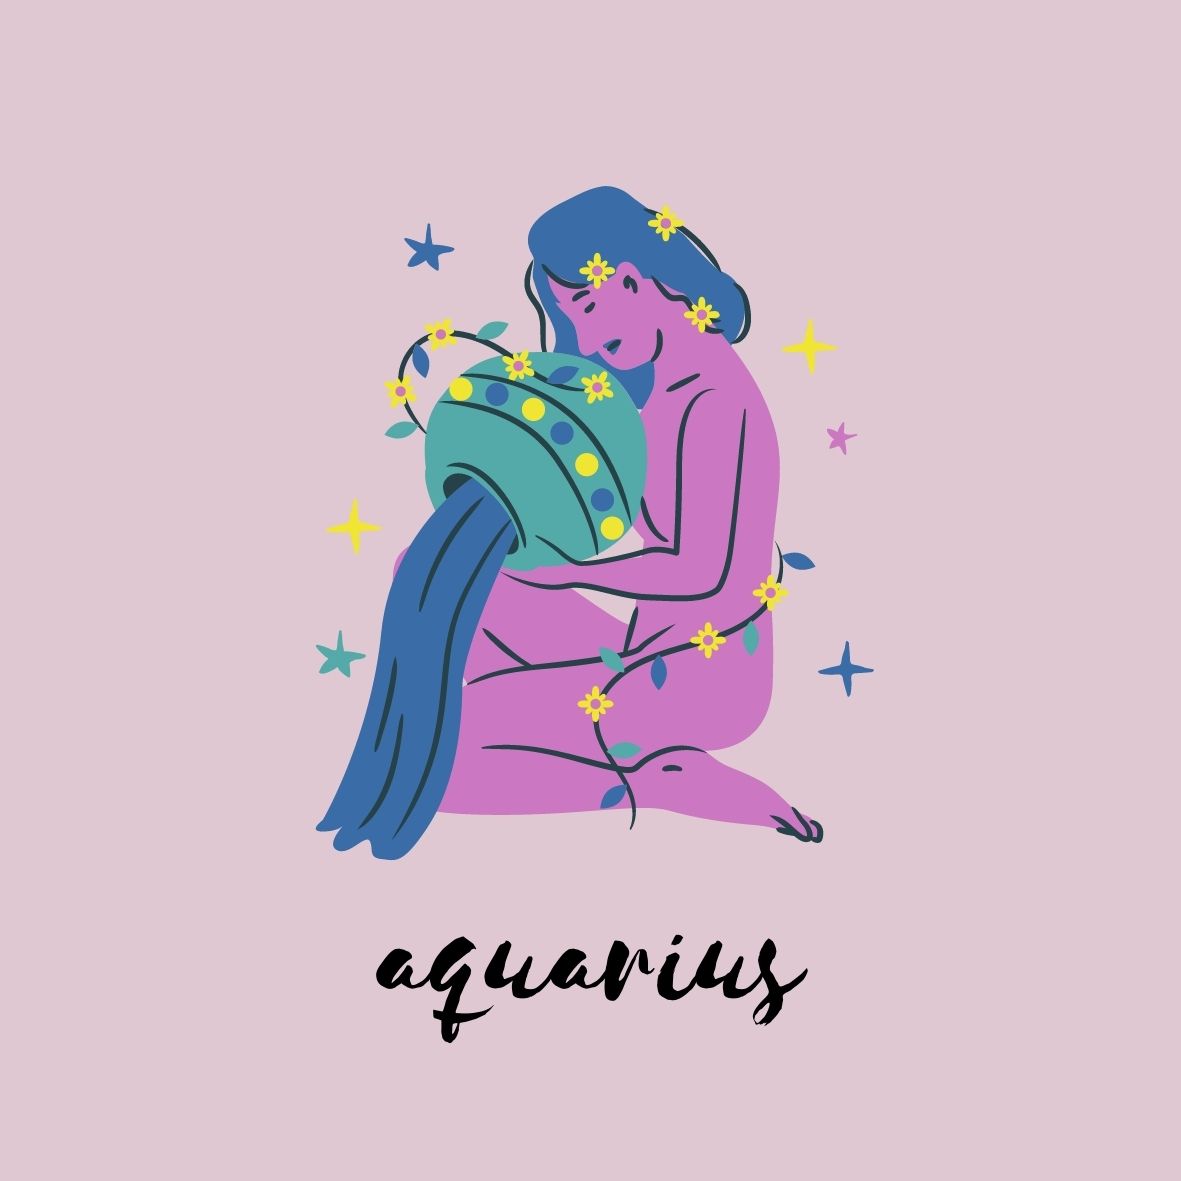 November Horoscope: Aquarius